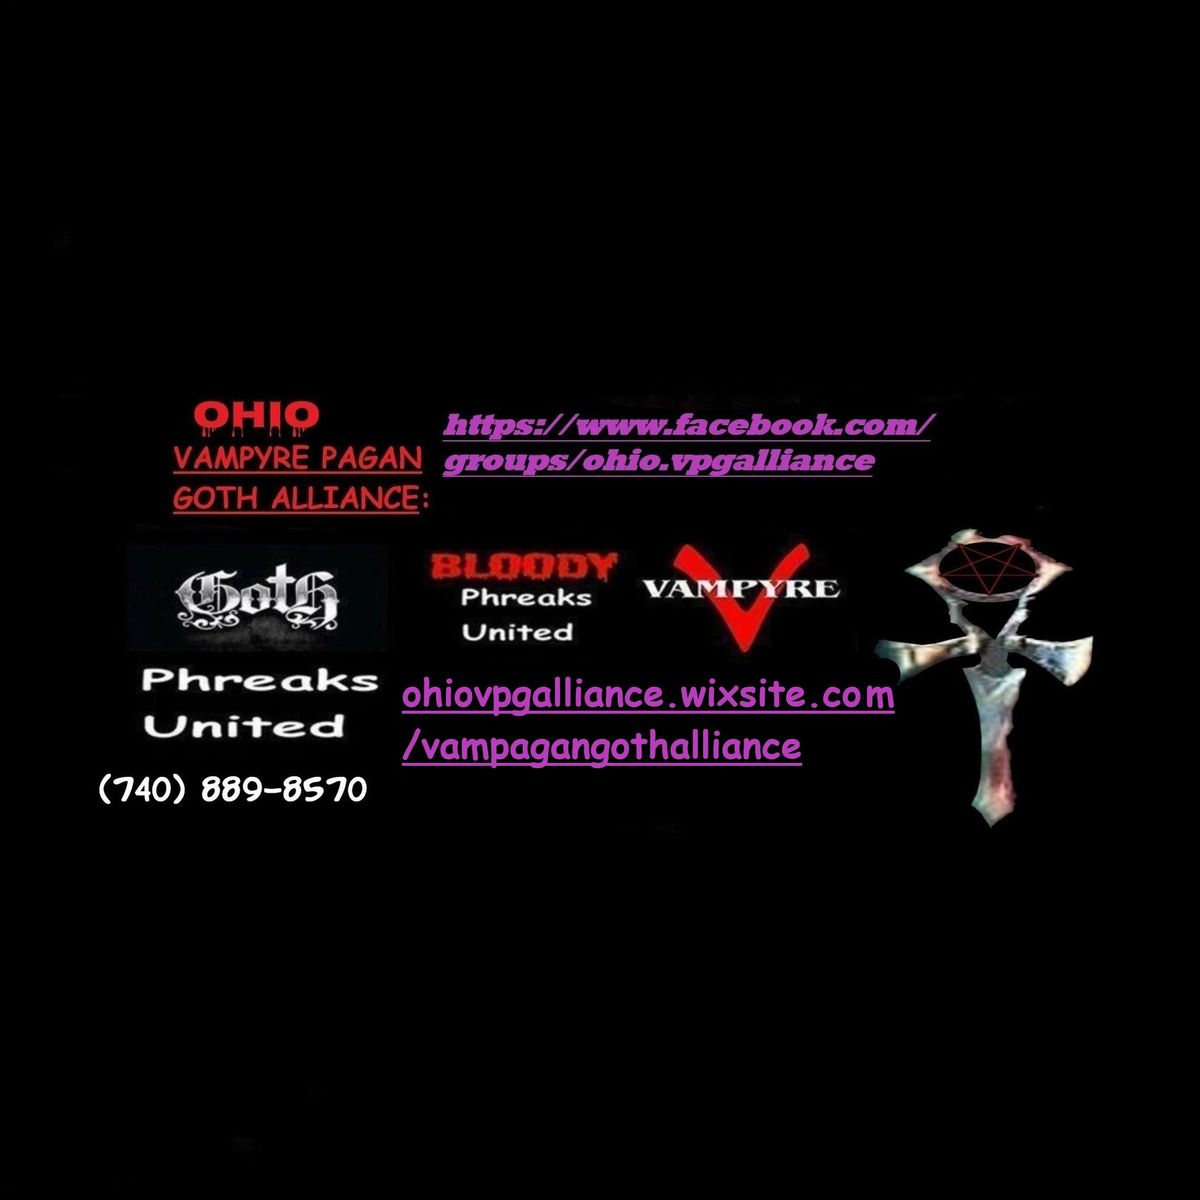 Columbus Ohio meet up for the Ohio Vamp Pagan Goth Alliance